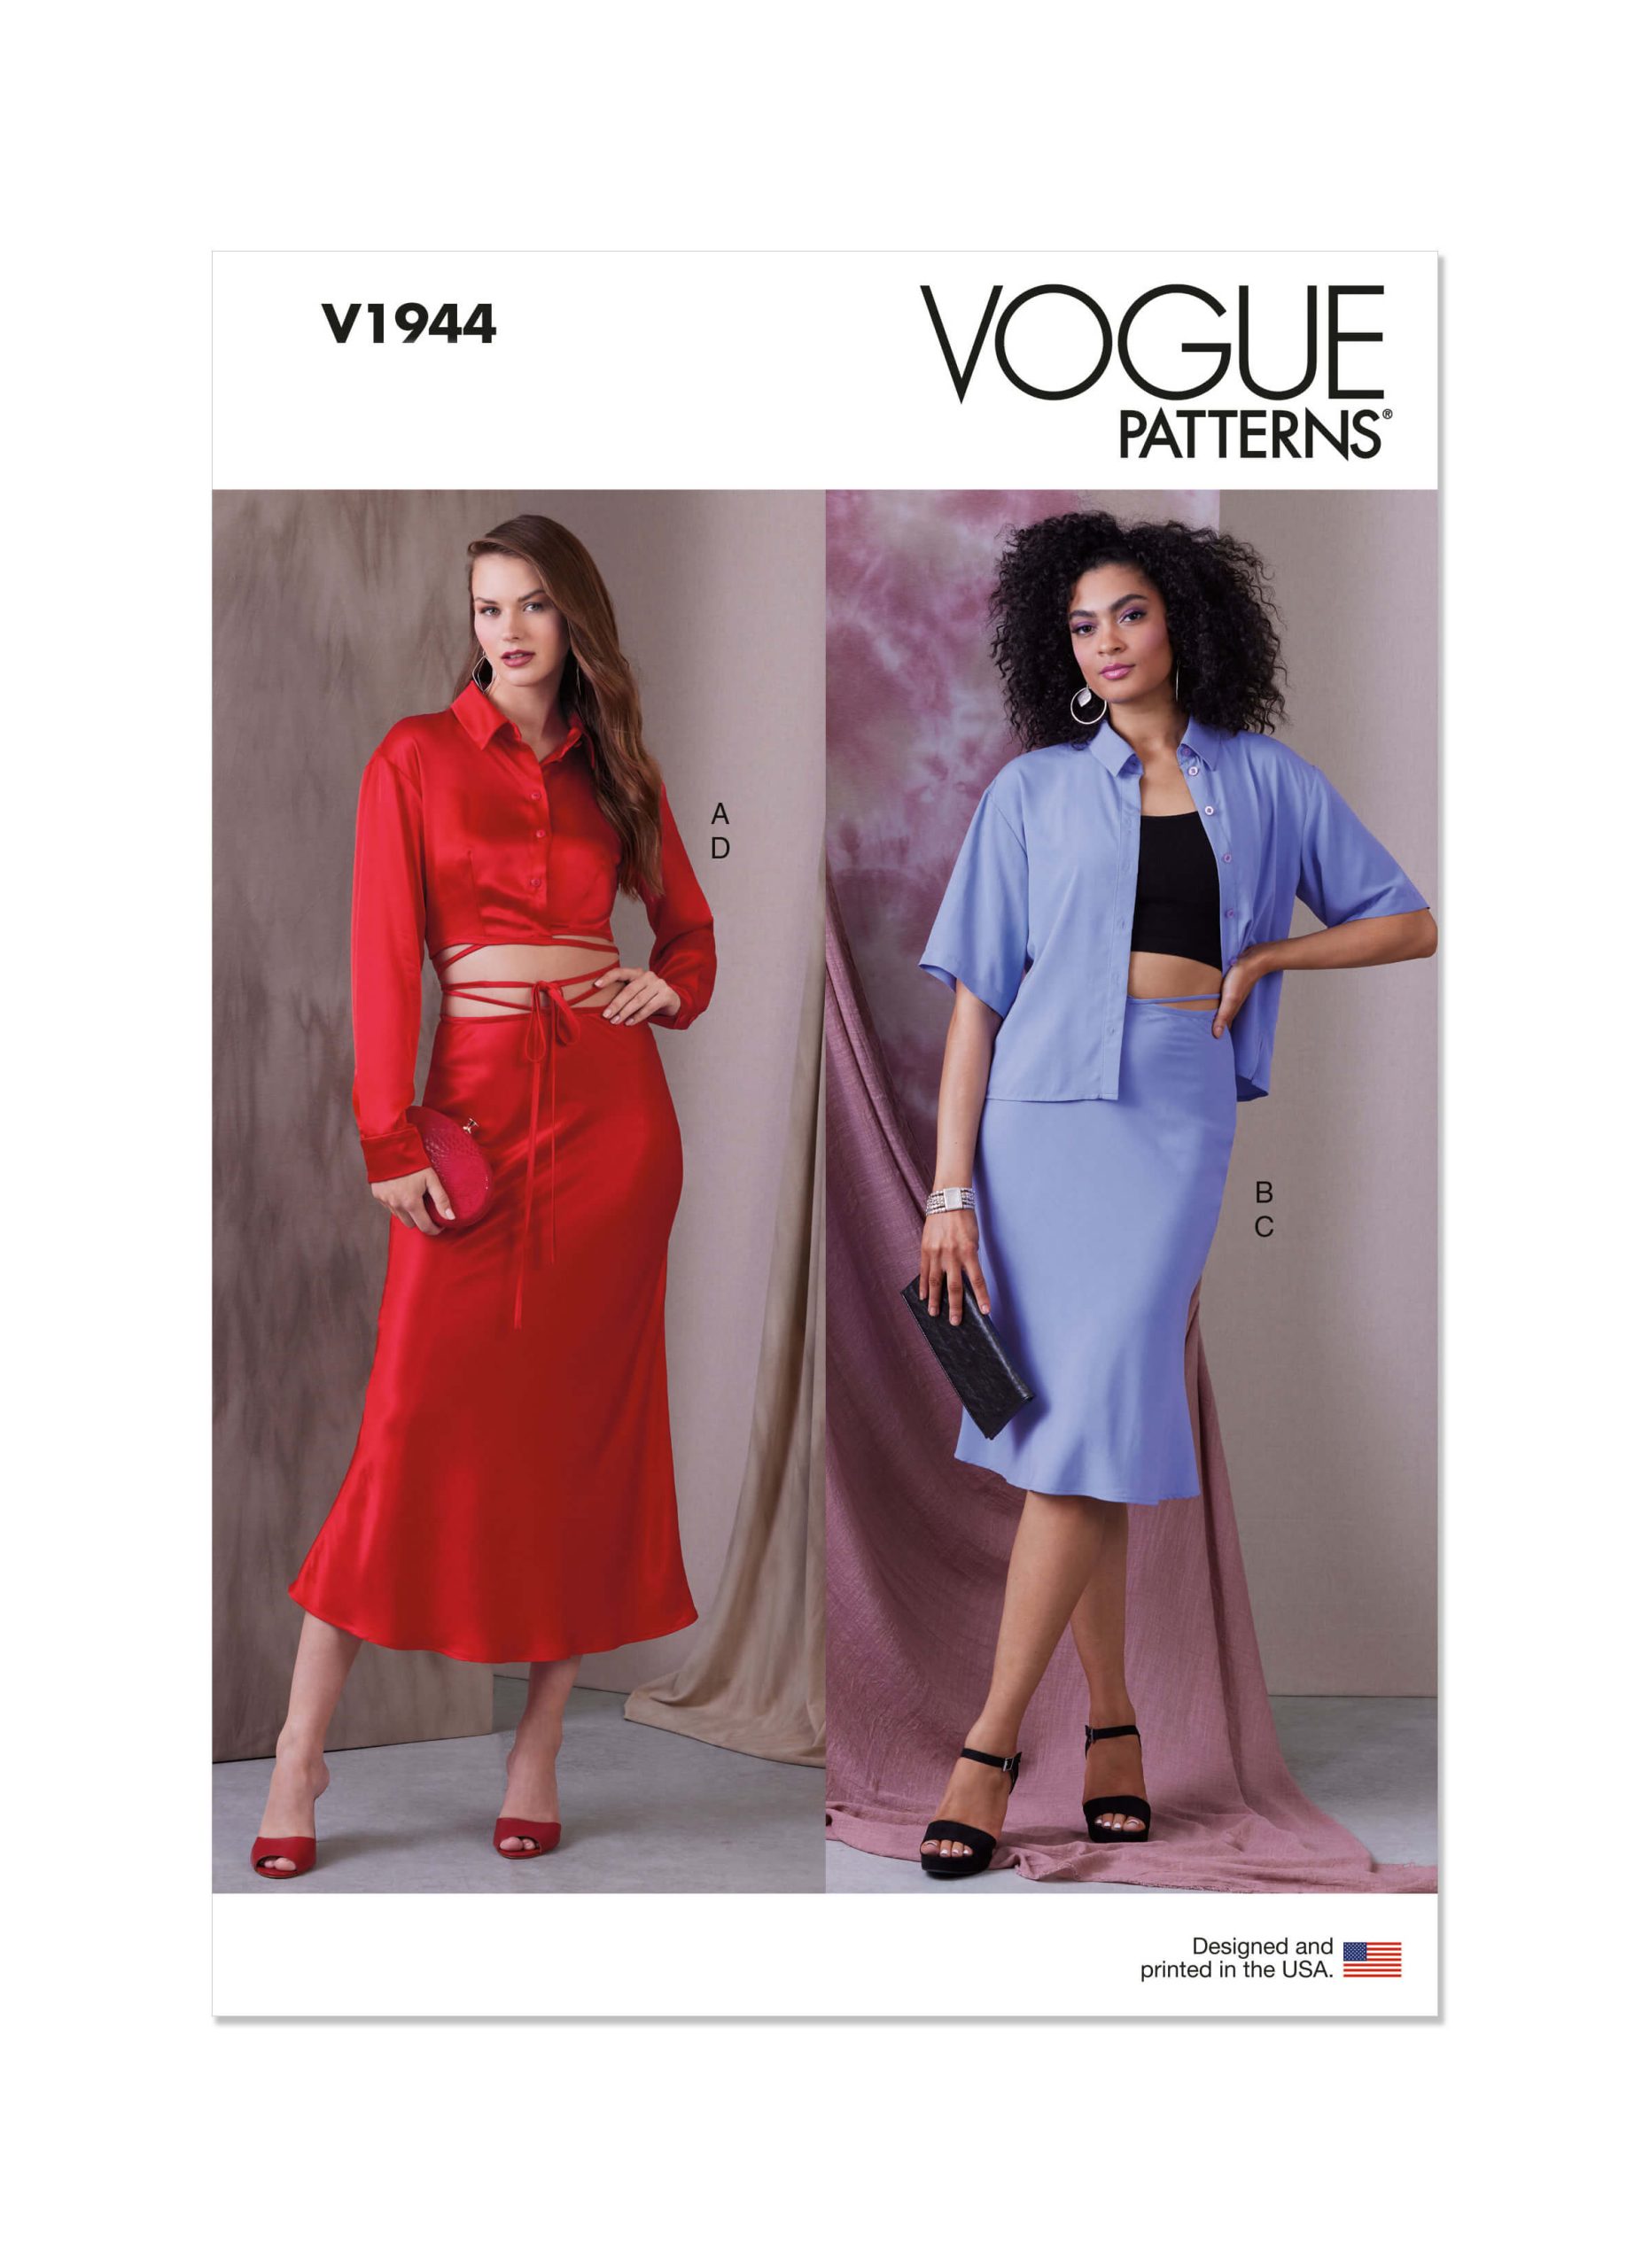 Vogue Patterns V1944 Misses' Tops and Skirts